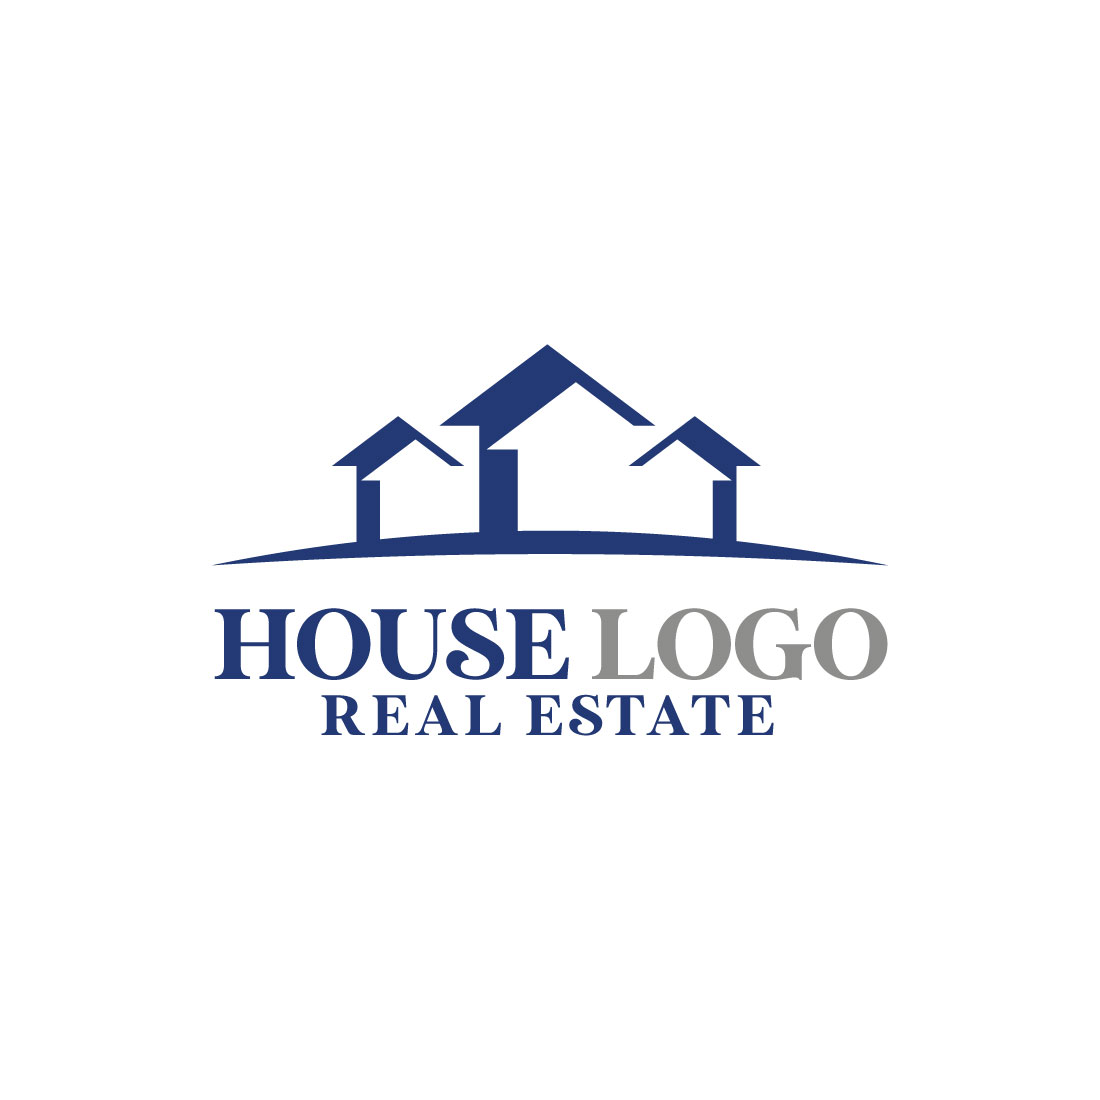 Real Estate & House Logo design preview image.